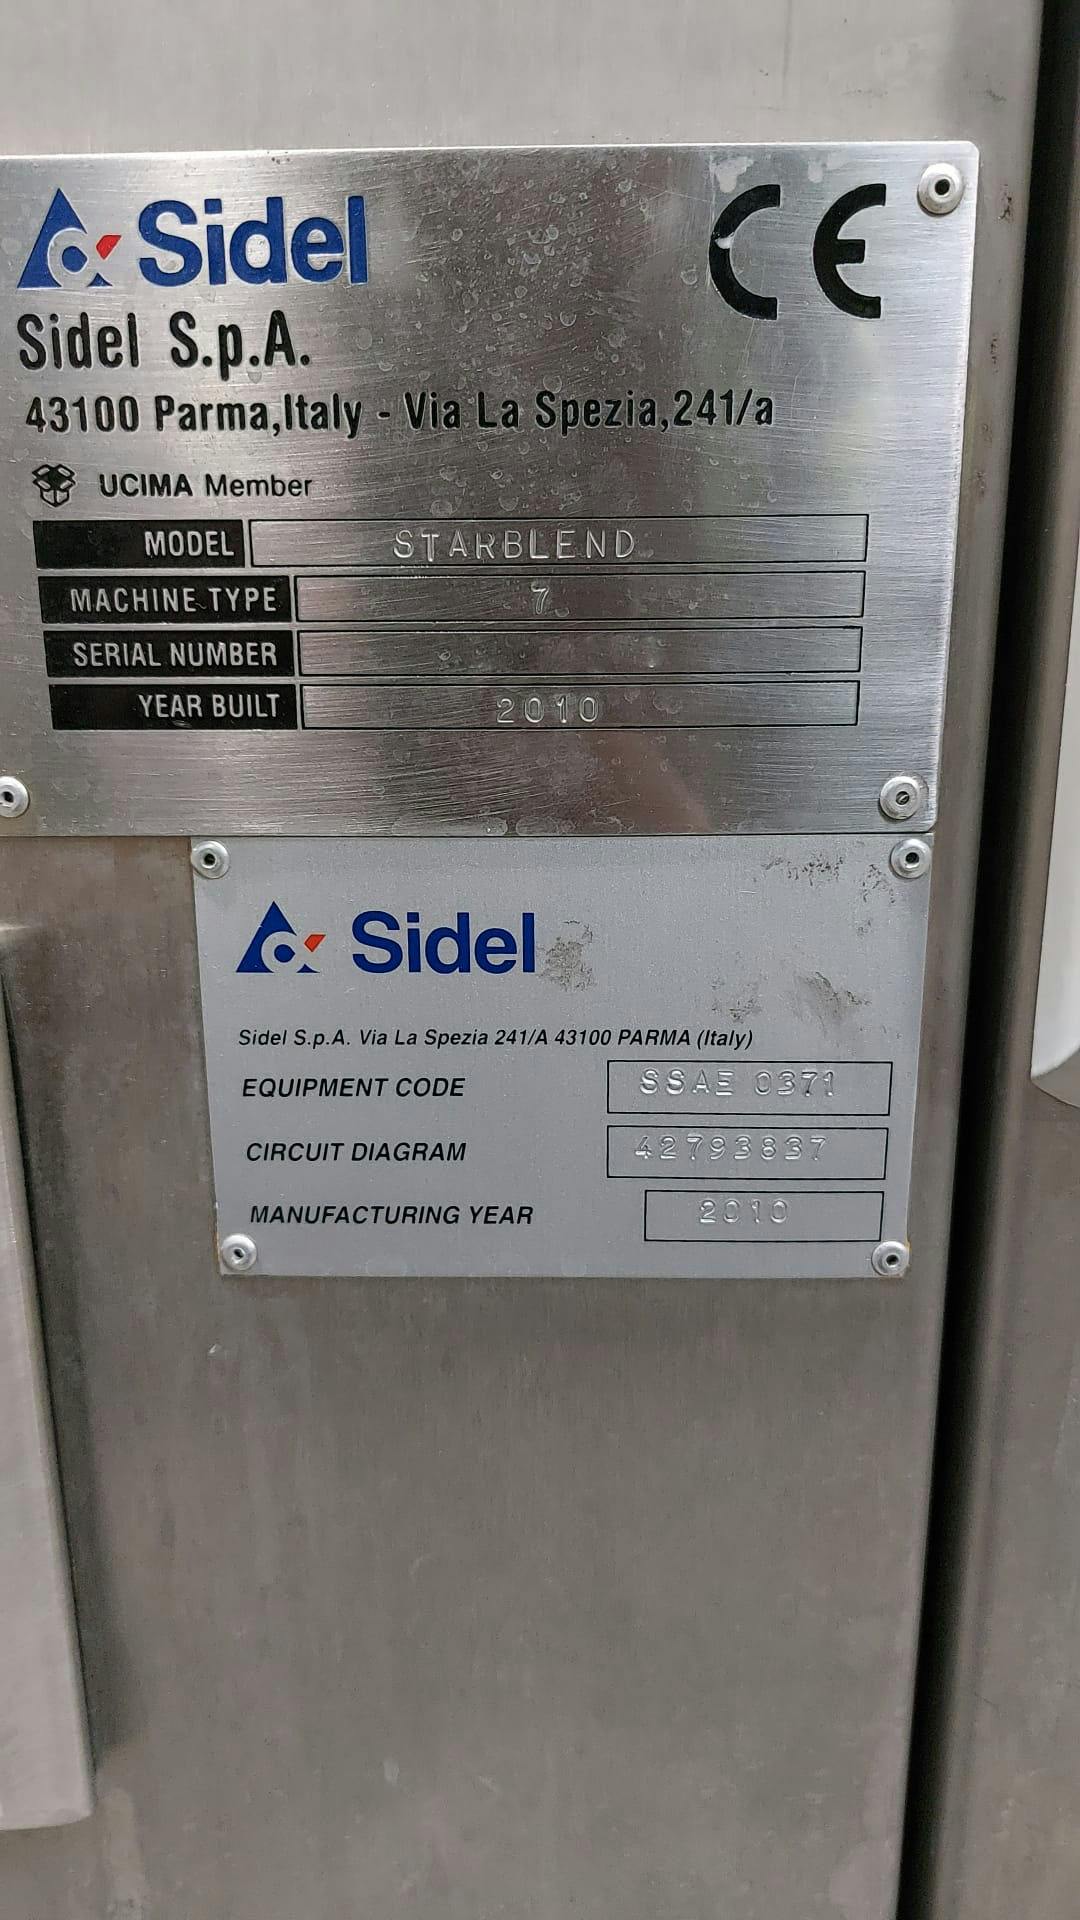 Nameplate of SIDEL Starblend